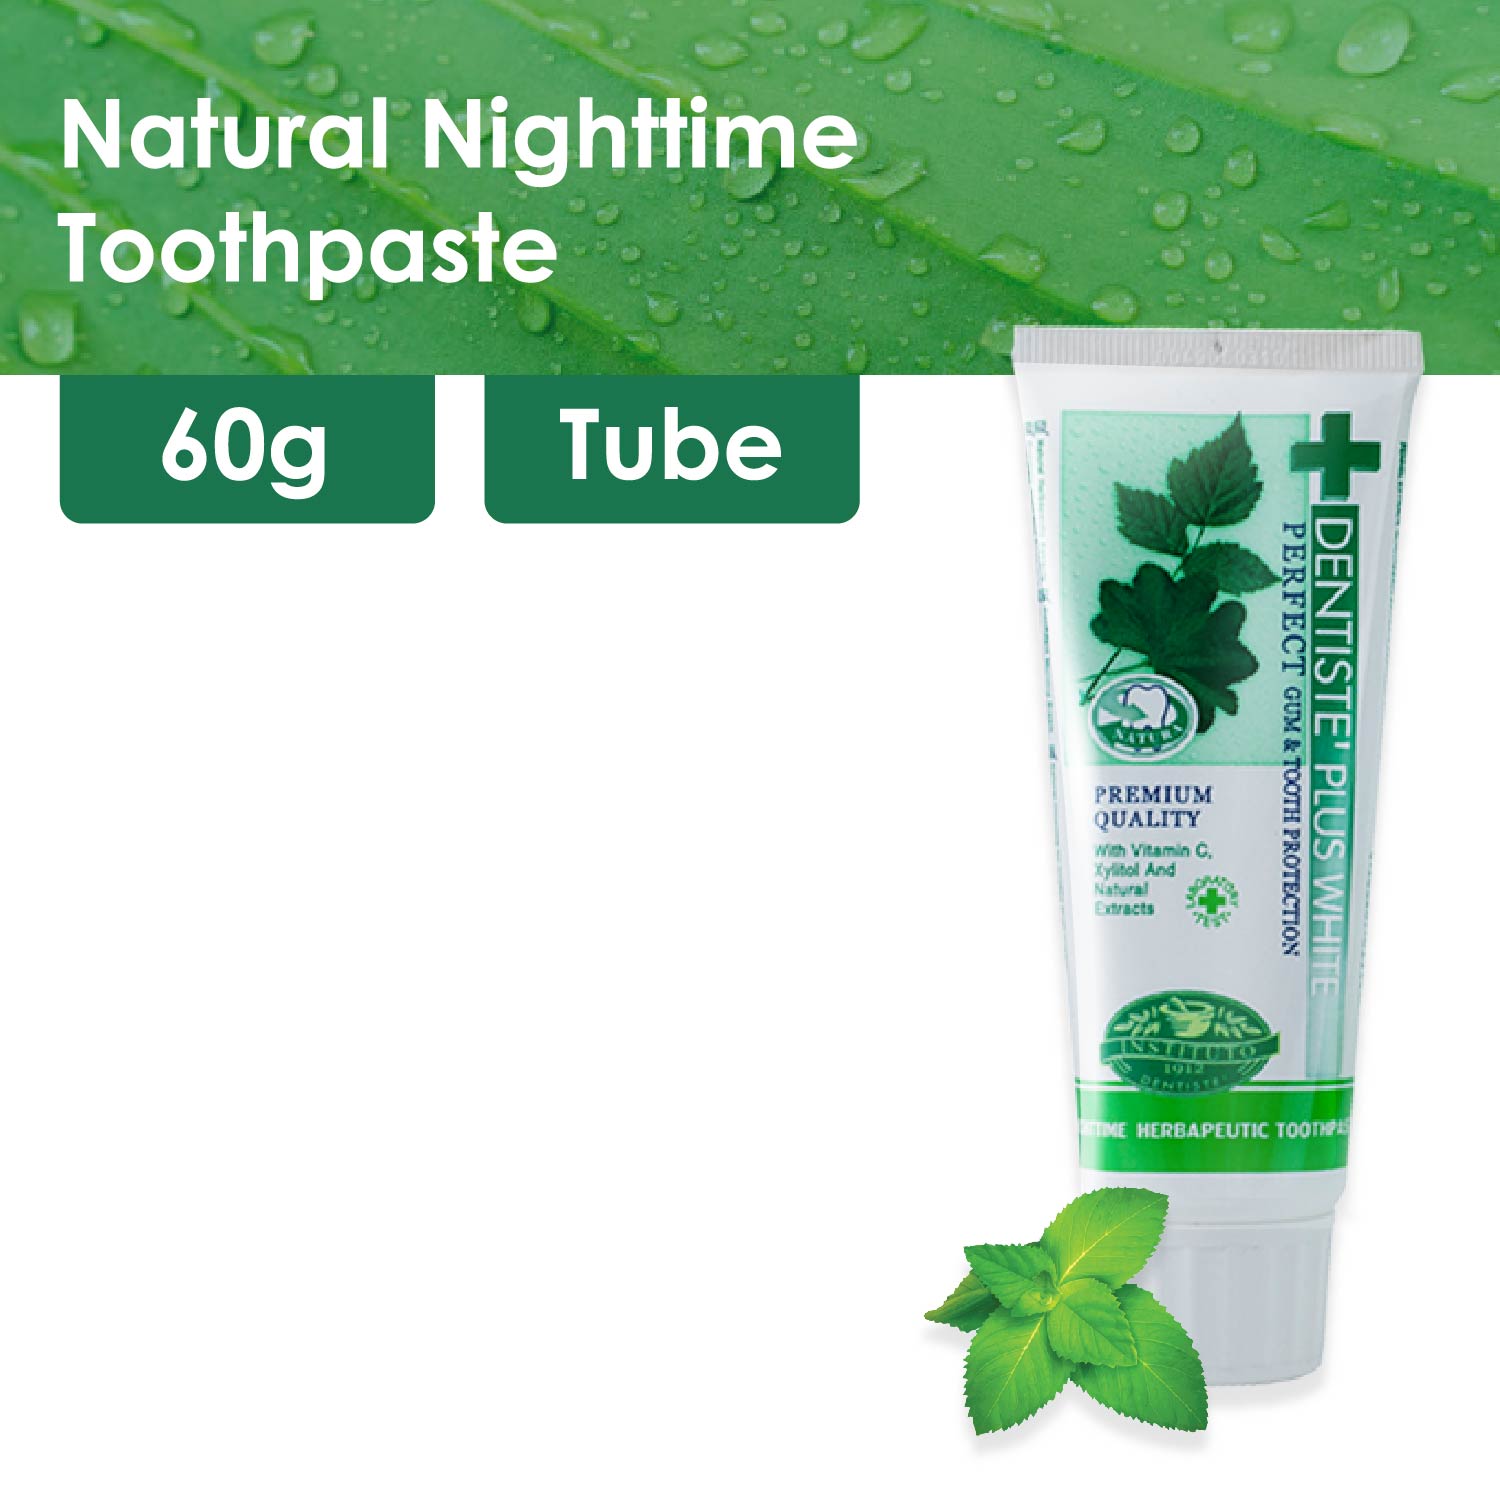 nighttime toothpaste